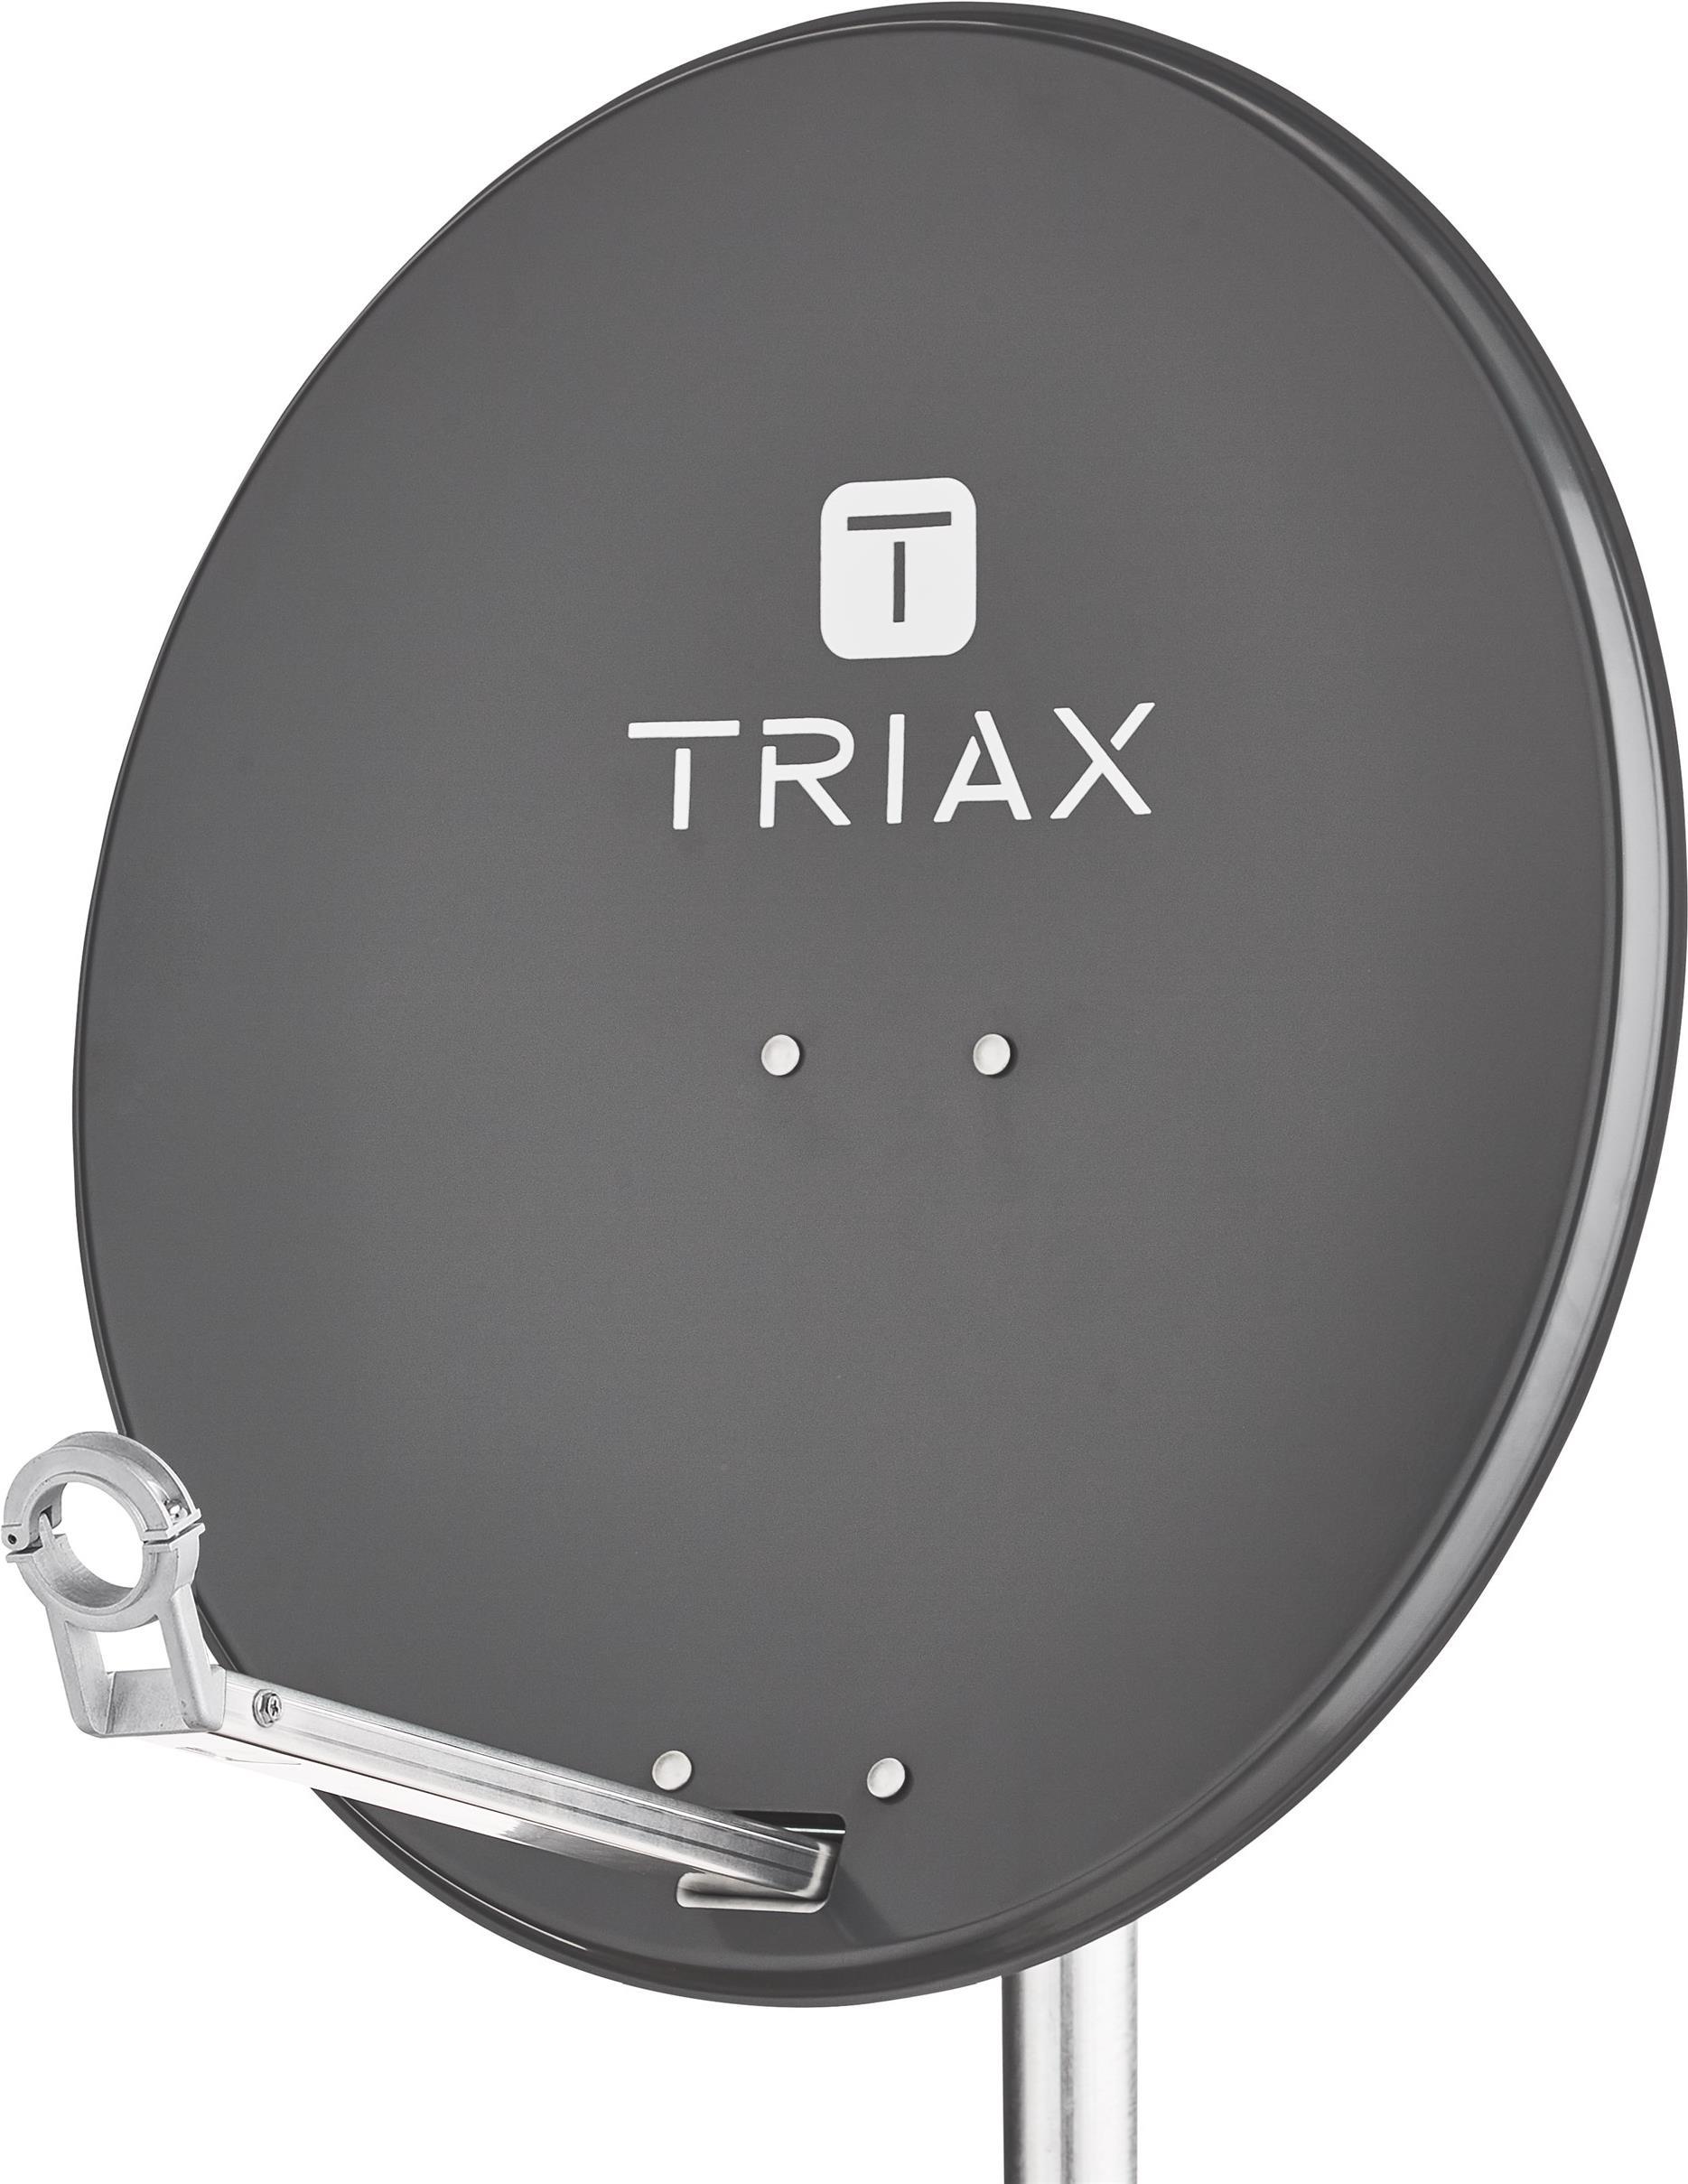 Triax TDA 65A Satellitenantenne 10,7 - 12,75 GHz Anthrazit - Grau (120504)